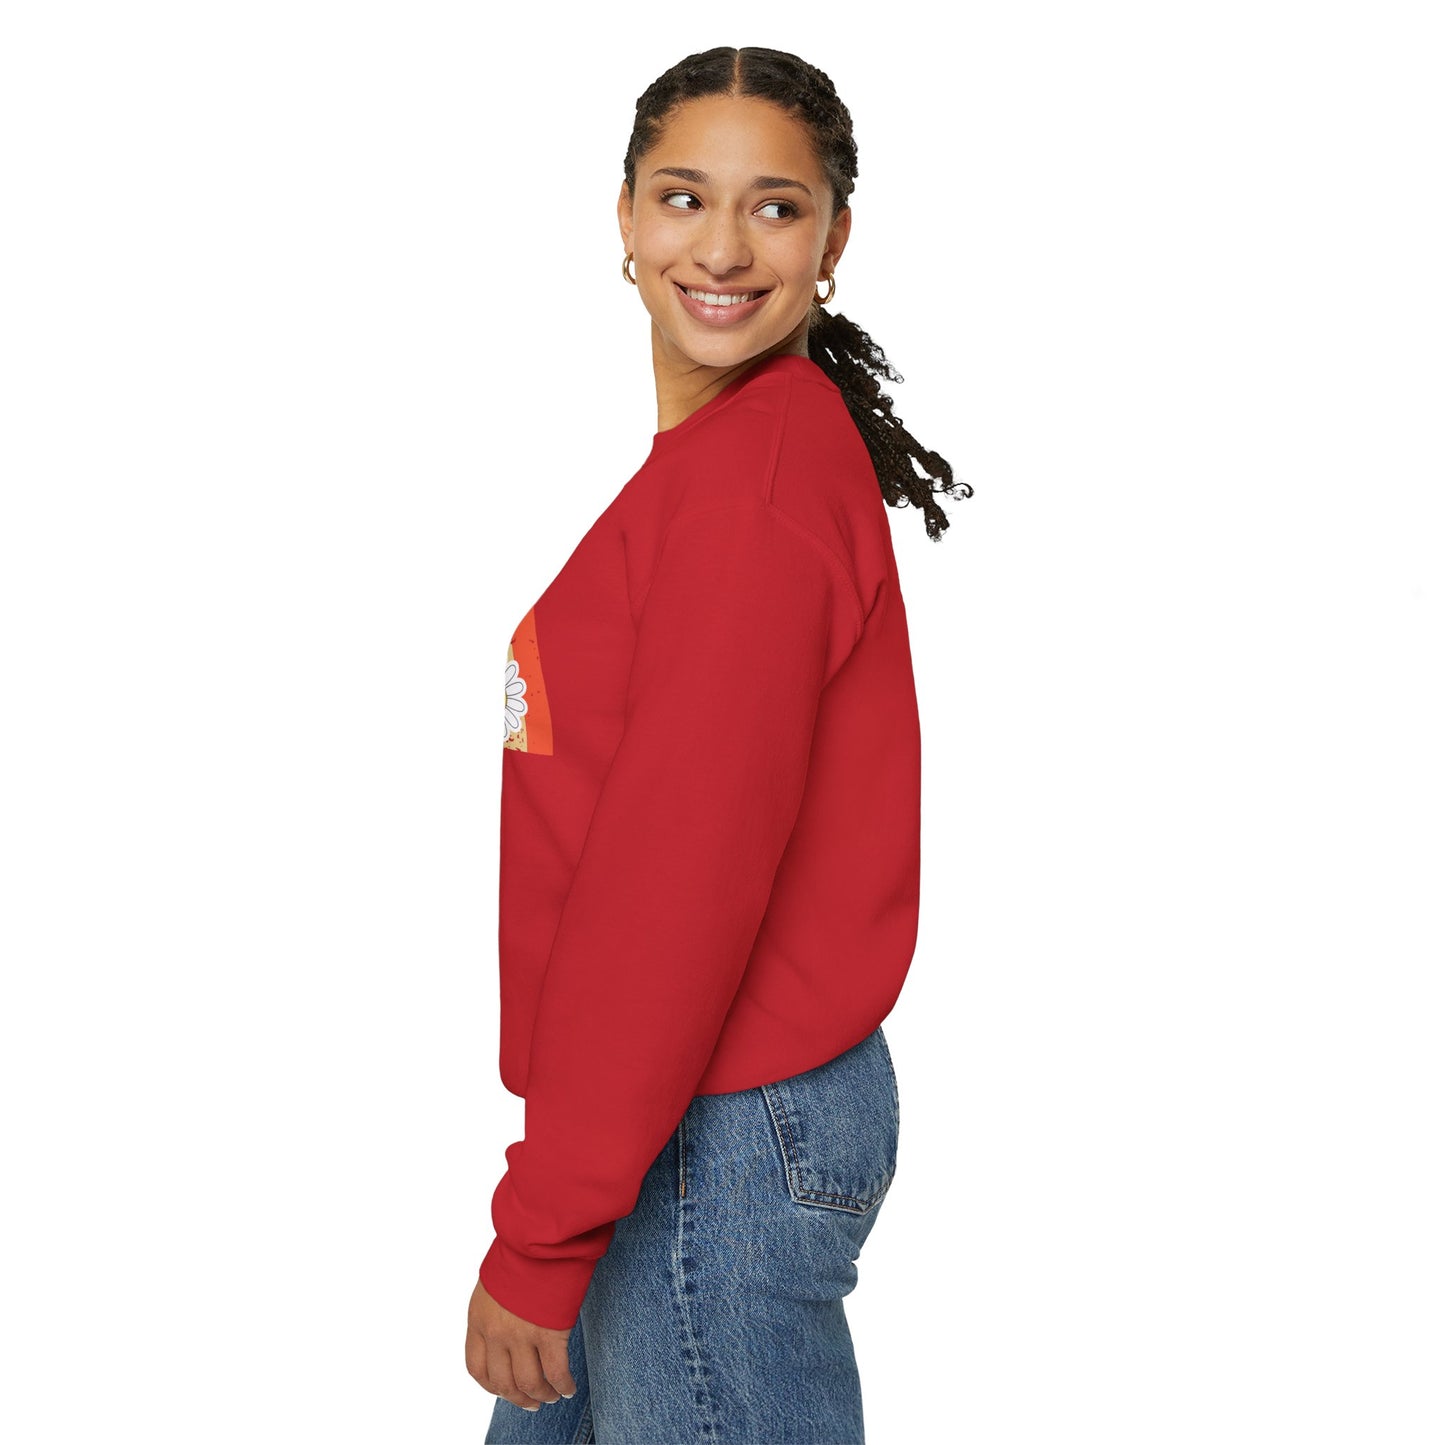 Girl Power Shirt, GRL PWR Crewneck Sweatshirt